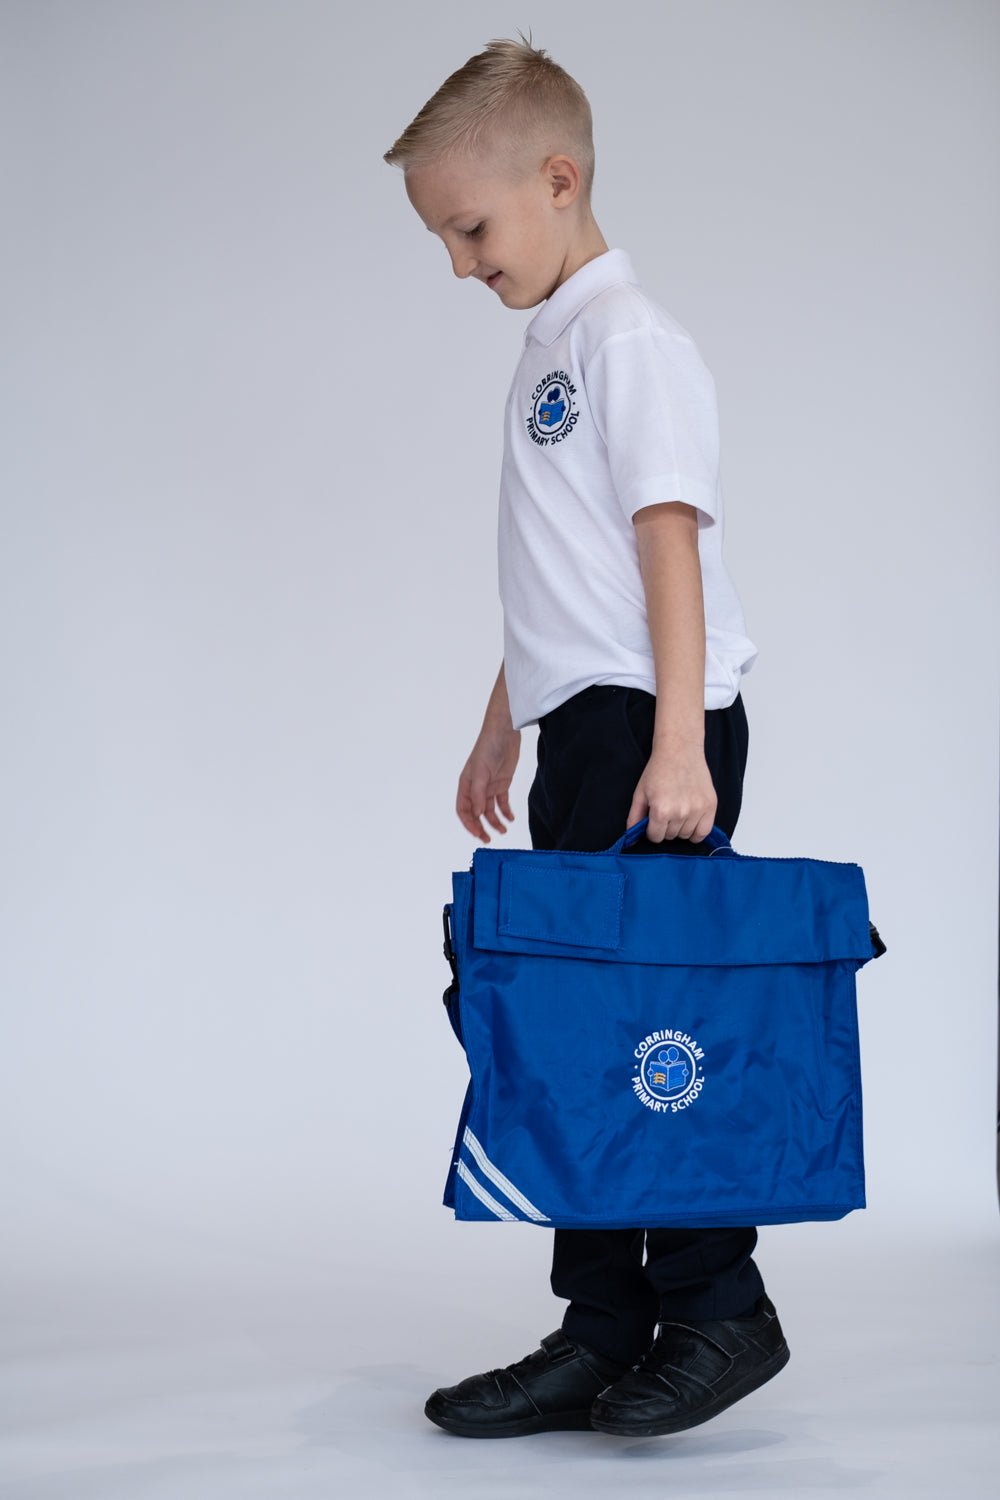 Corringham Primary Bookbag with personalisation - Uniformwise Schoolwear